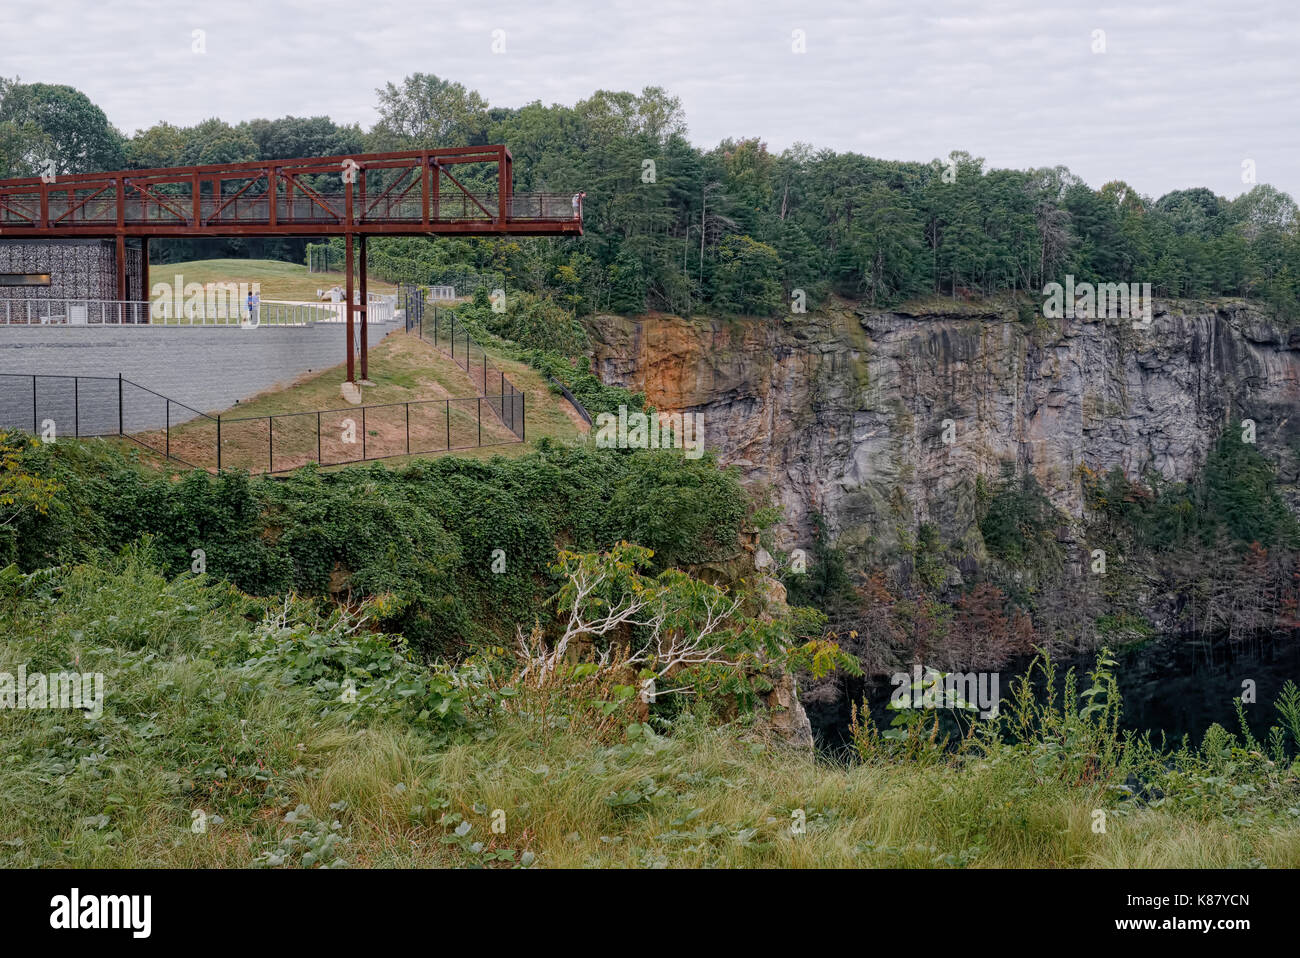 Quarry Park Winston Salem North Carolina. A crushed stone quarry converted to public park. Stock Photo